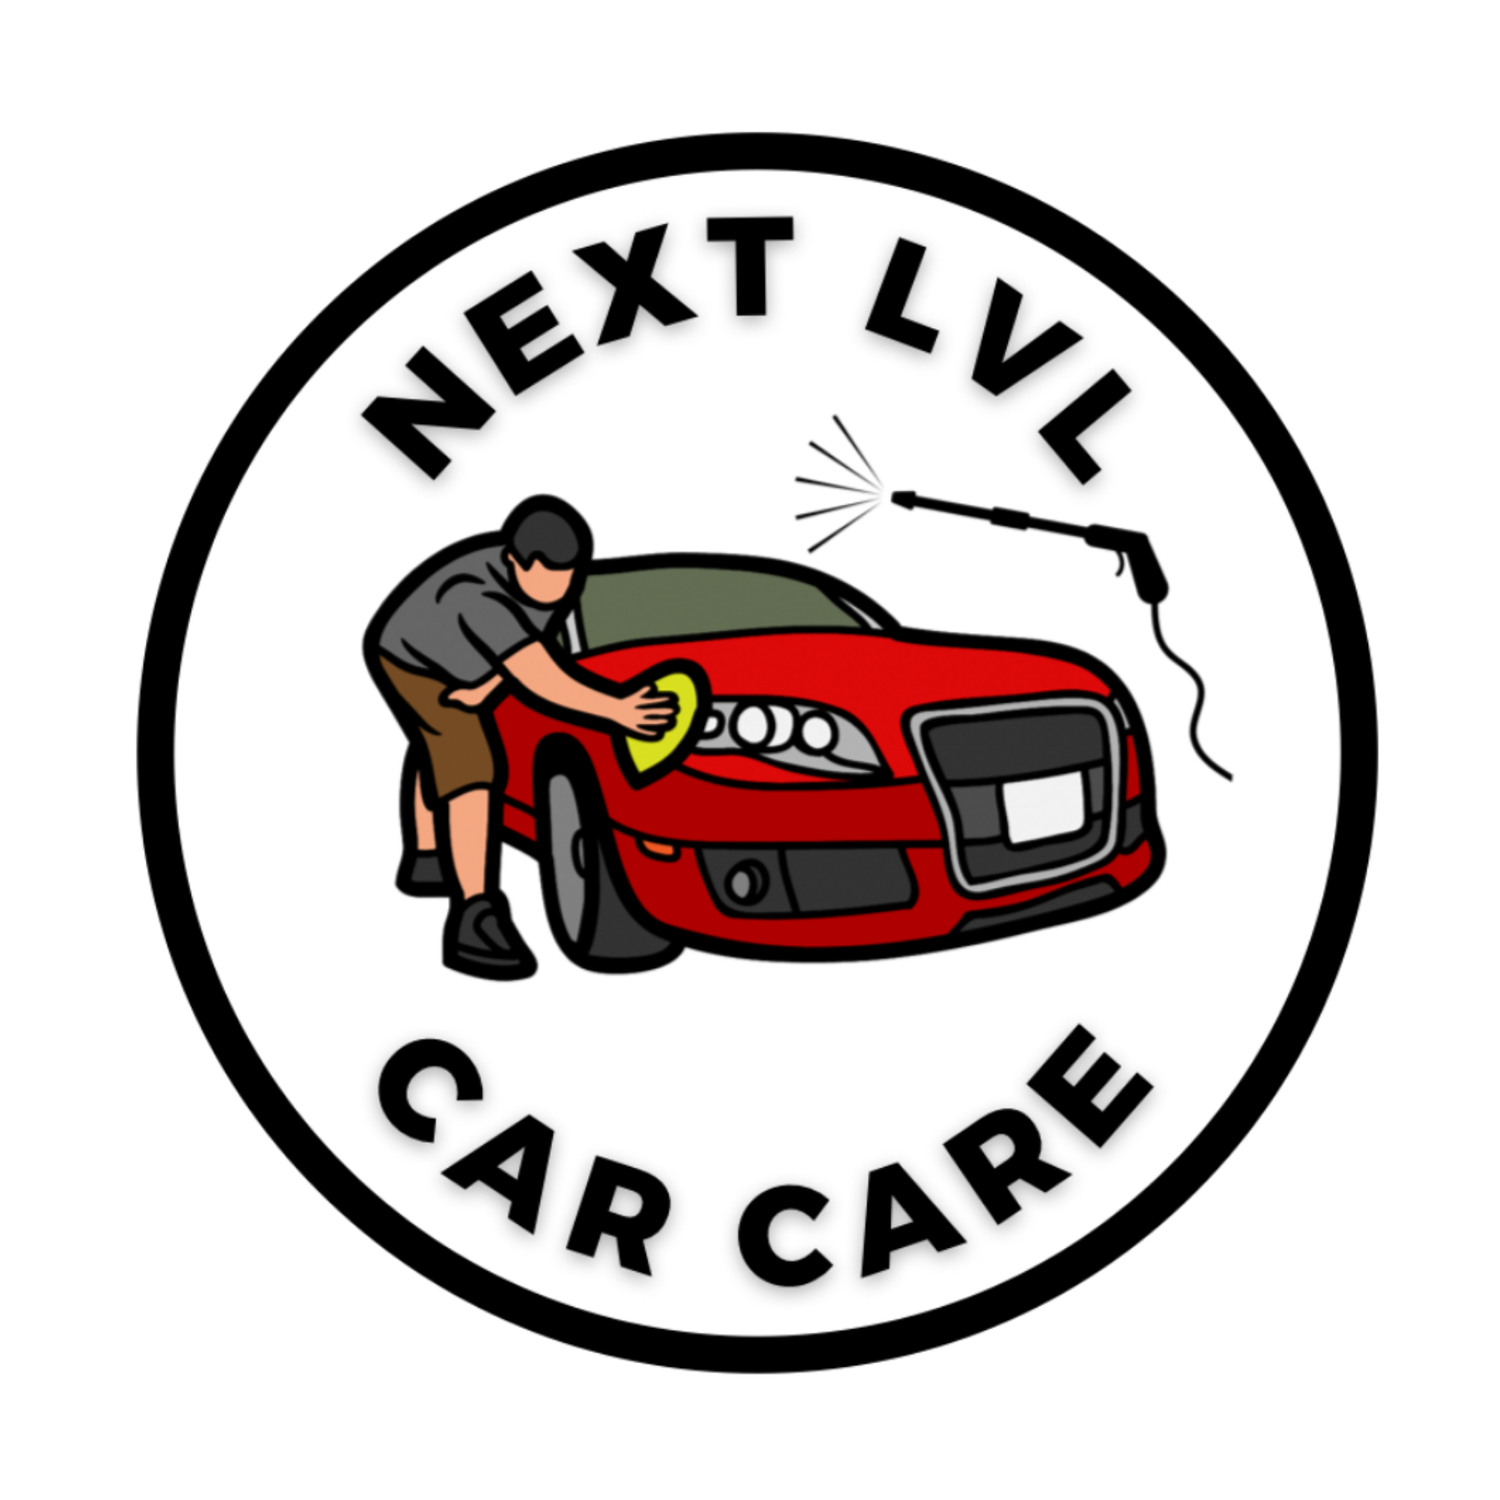 Next LVL Car Care LLC